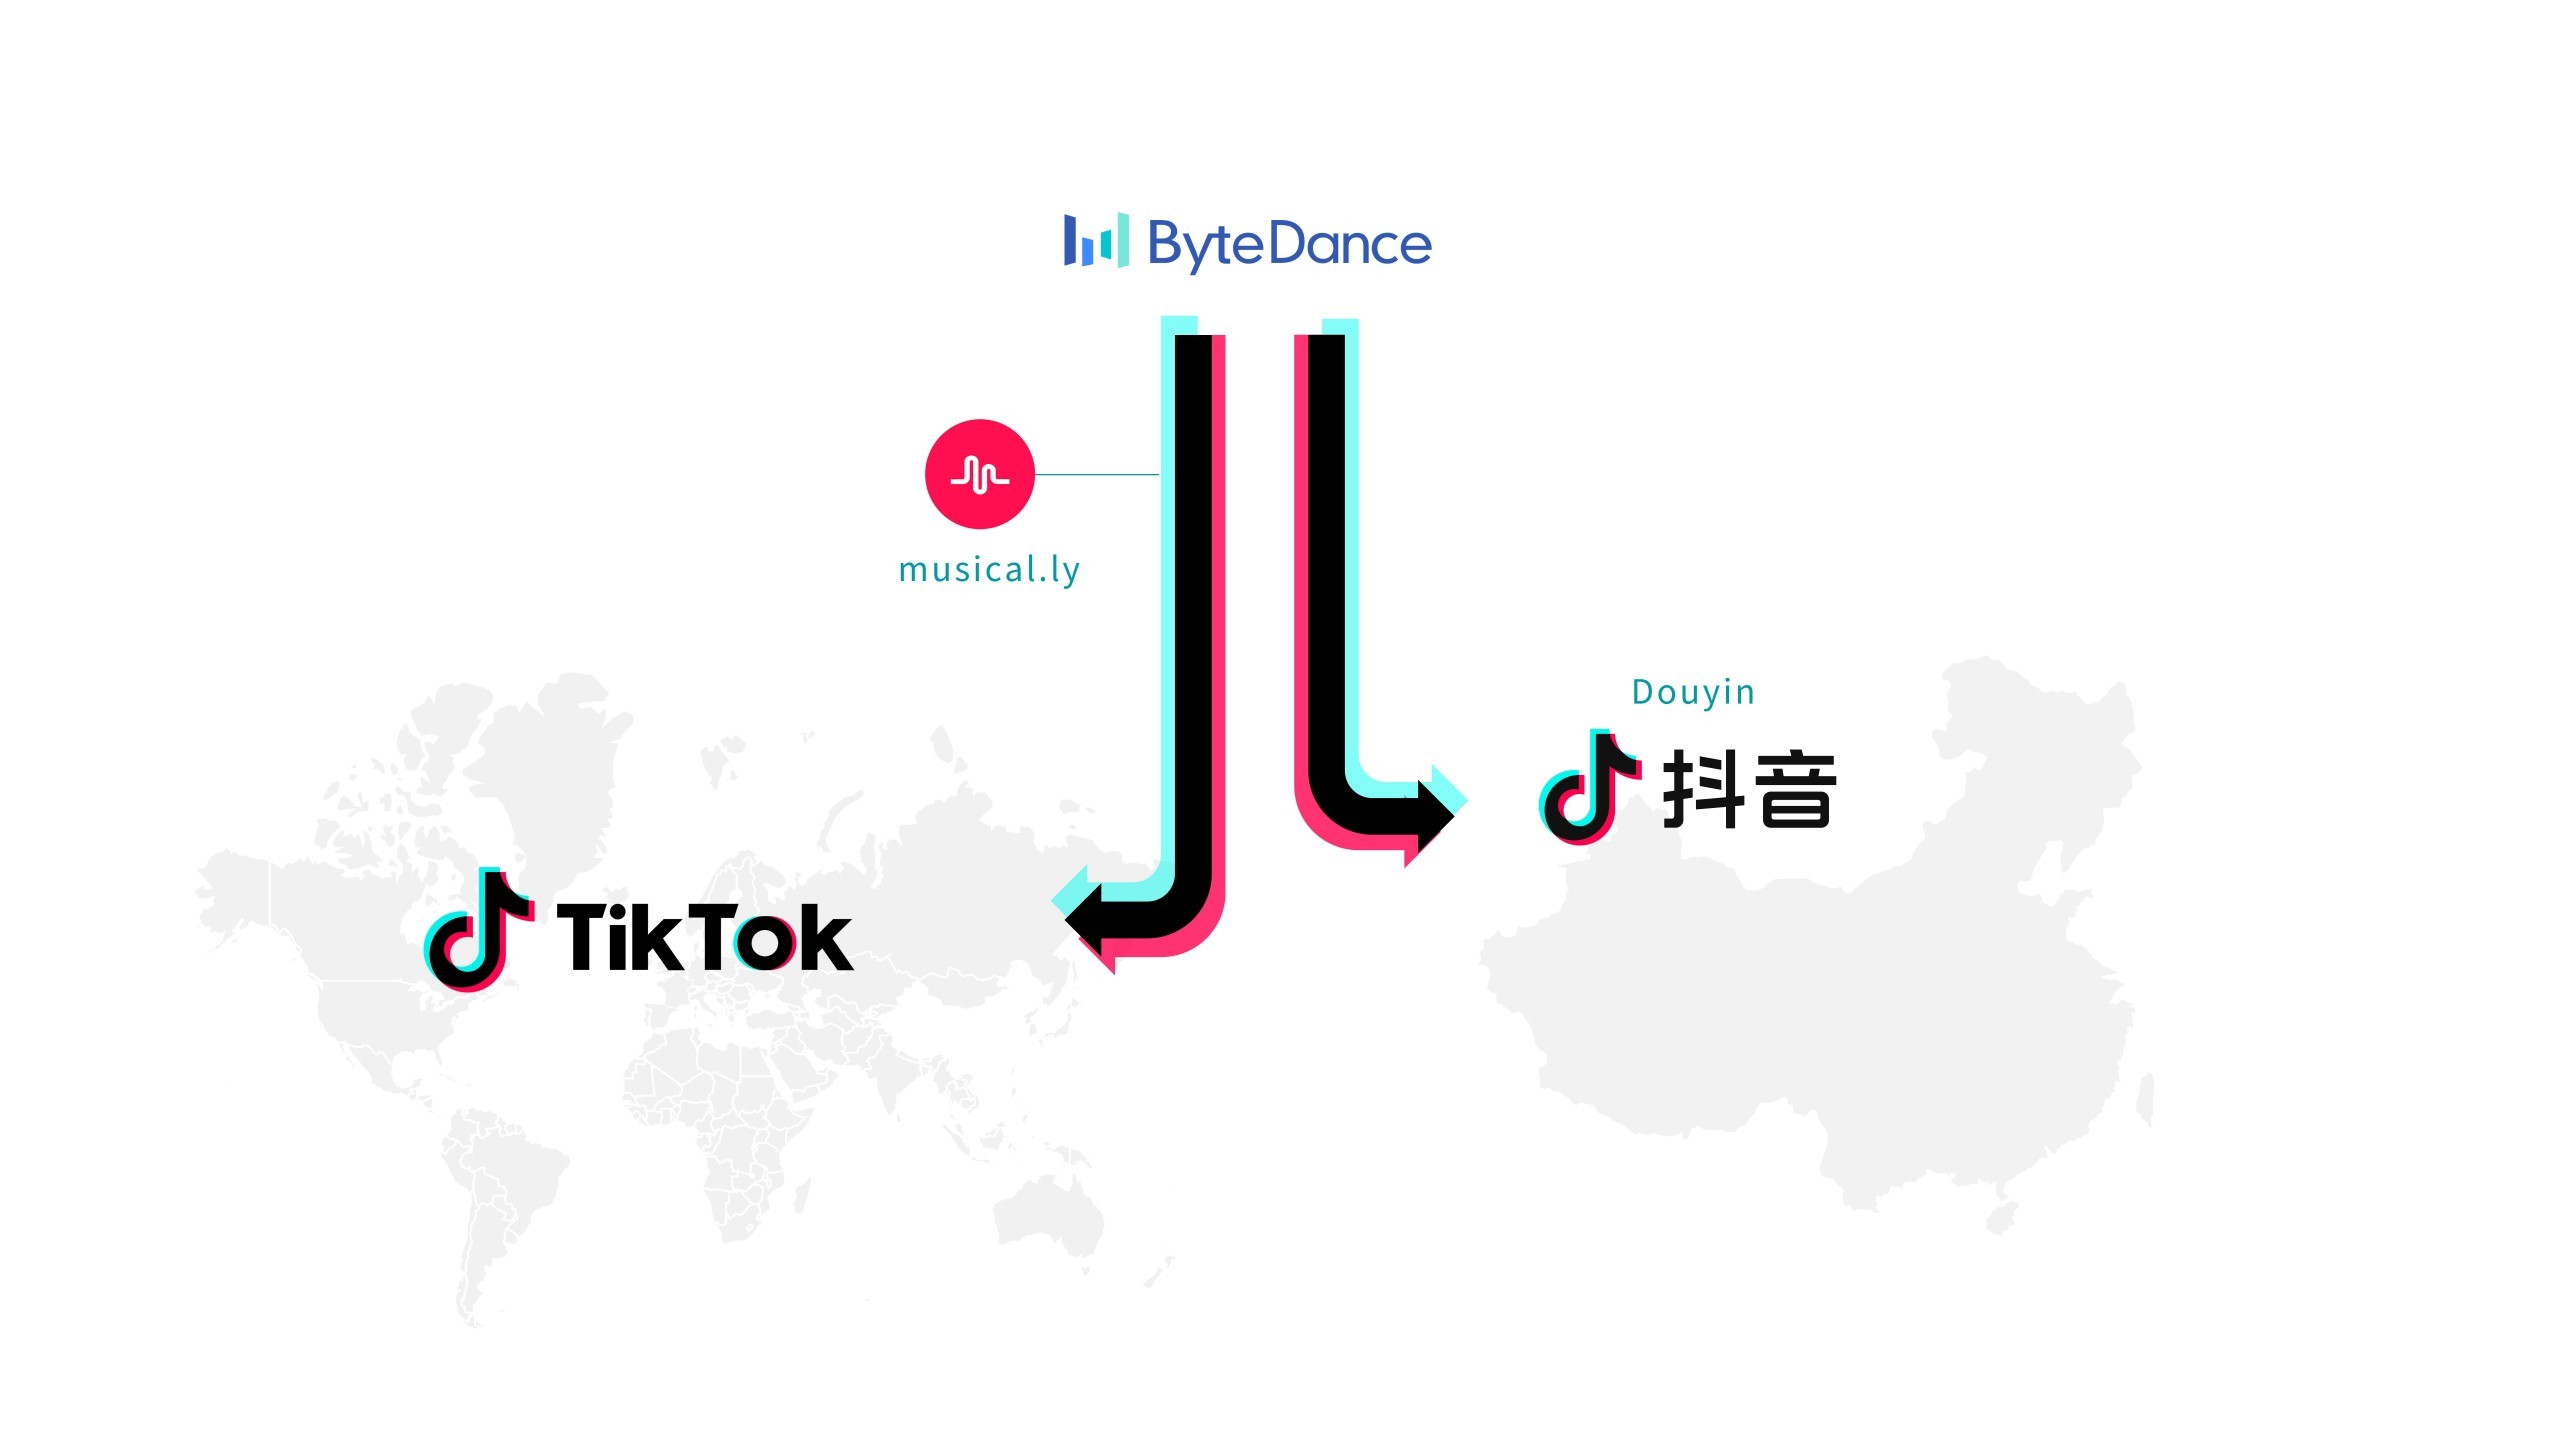 Infographic explaining the relationship between ByteDance, Douyin and TikTok